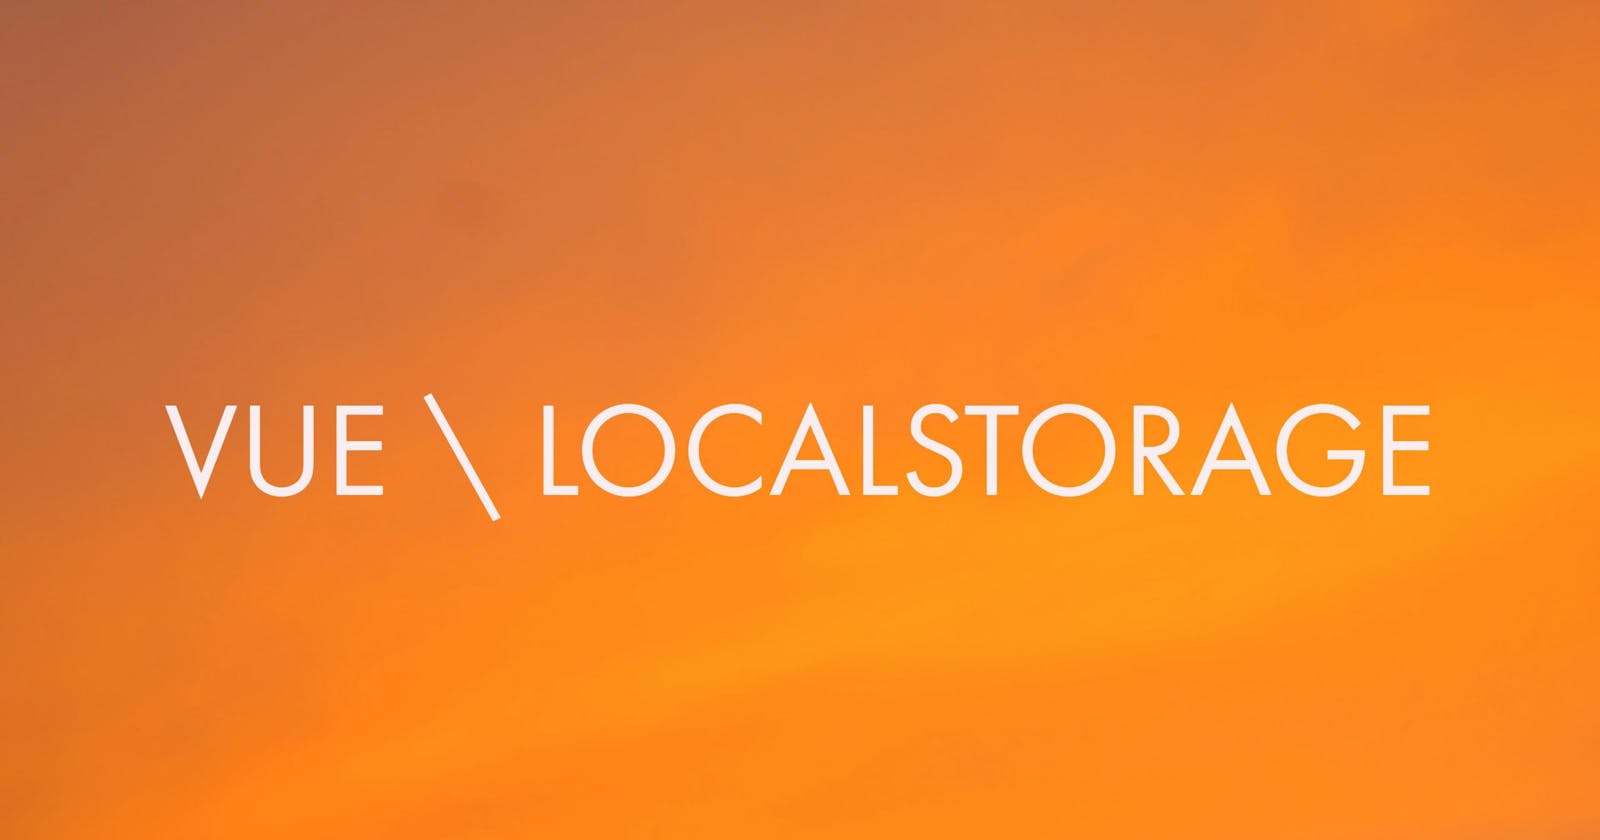 Add LocalStorage to your Vue app in 2 lines of code